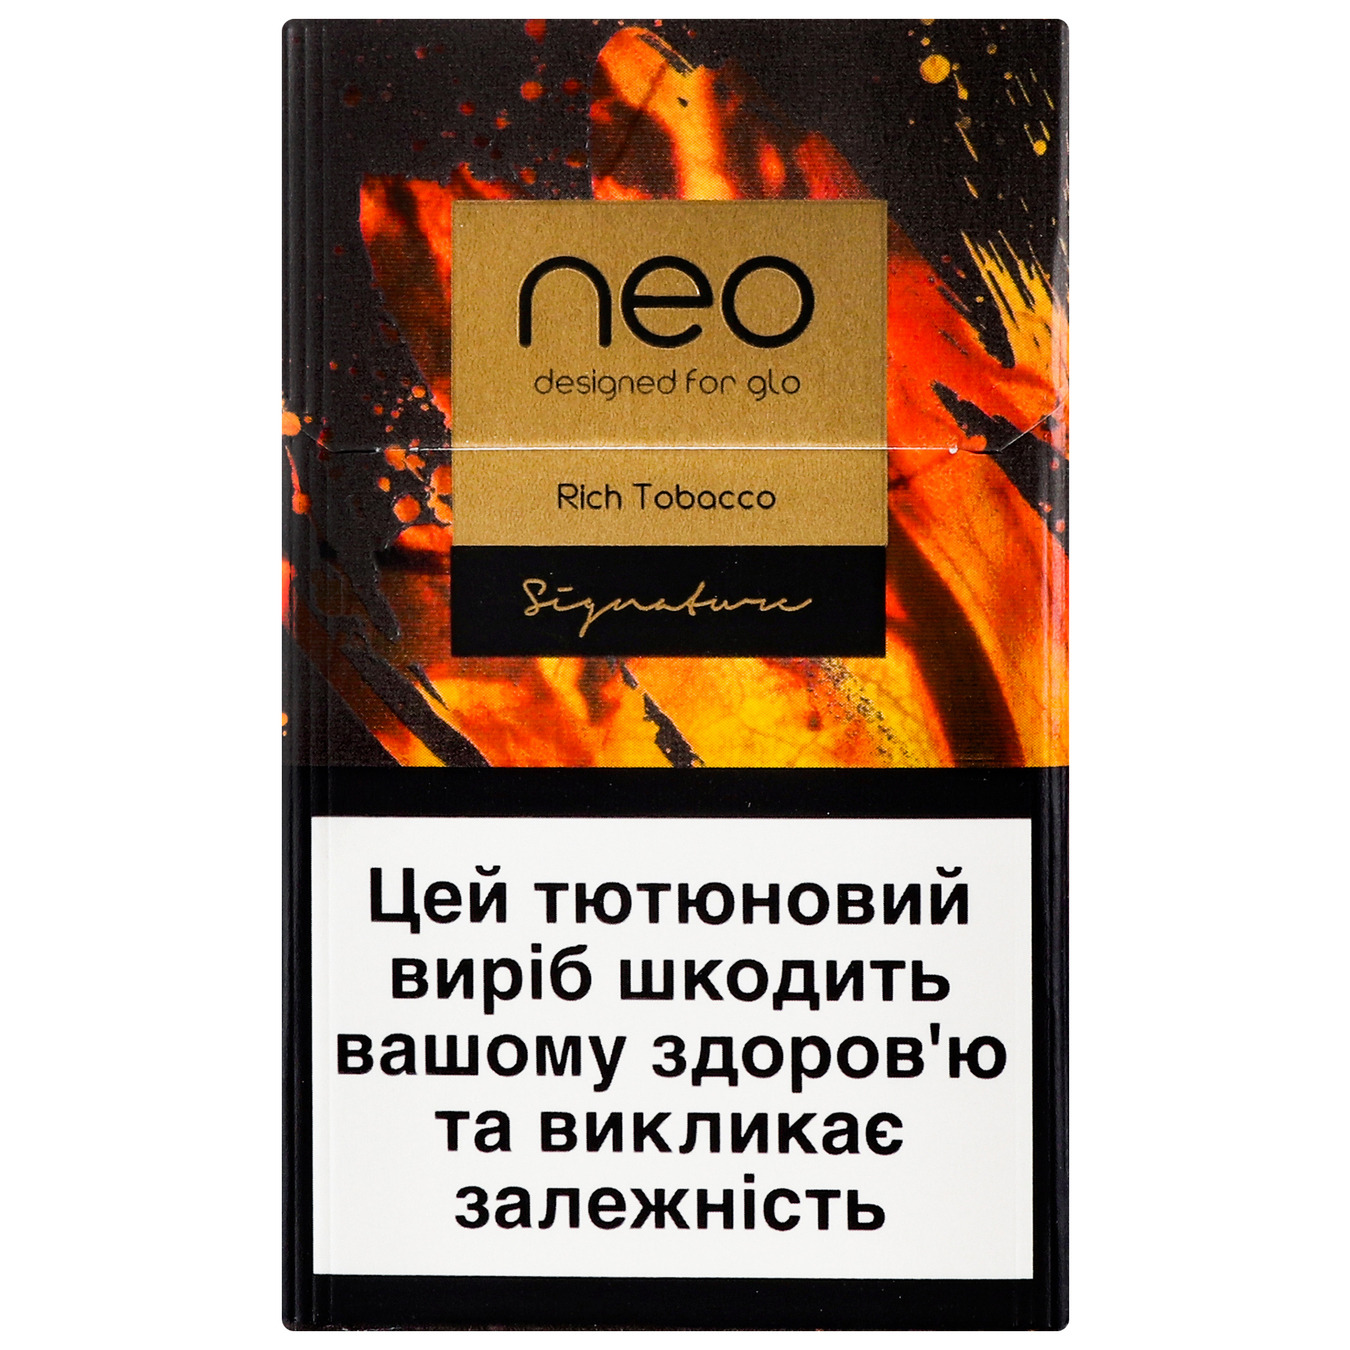 Стики Neo Demi Rich Tobacco табакосодержащие 20шт (цена указана без акциза)